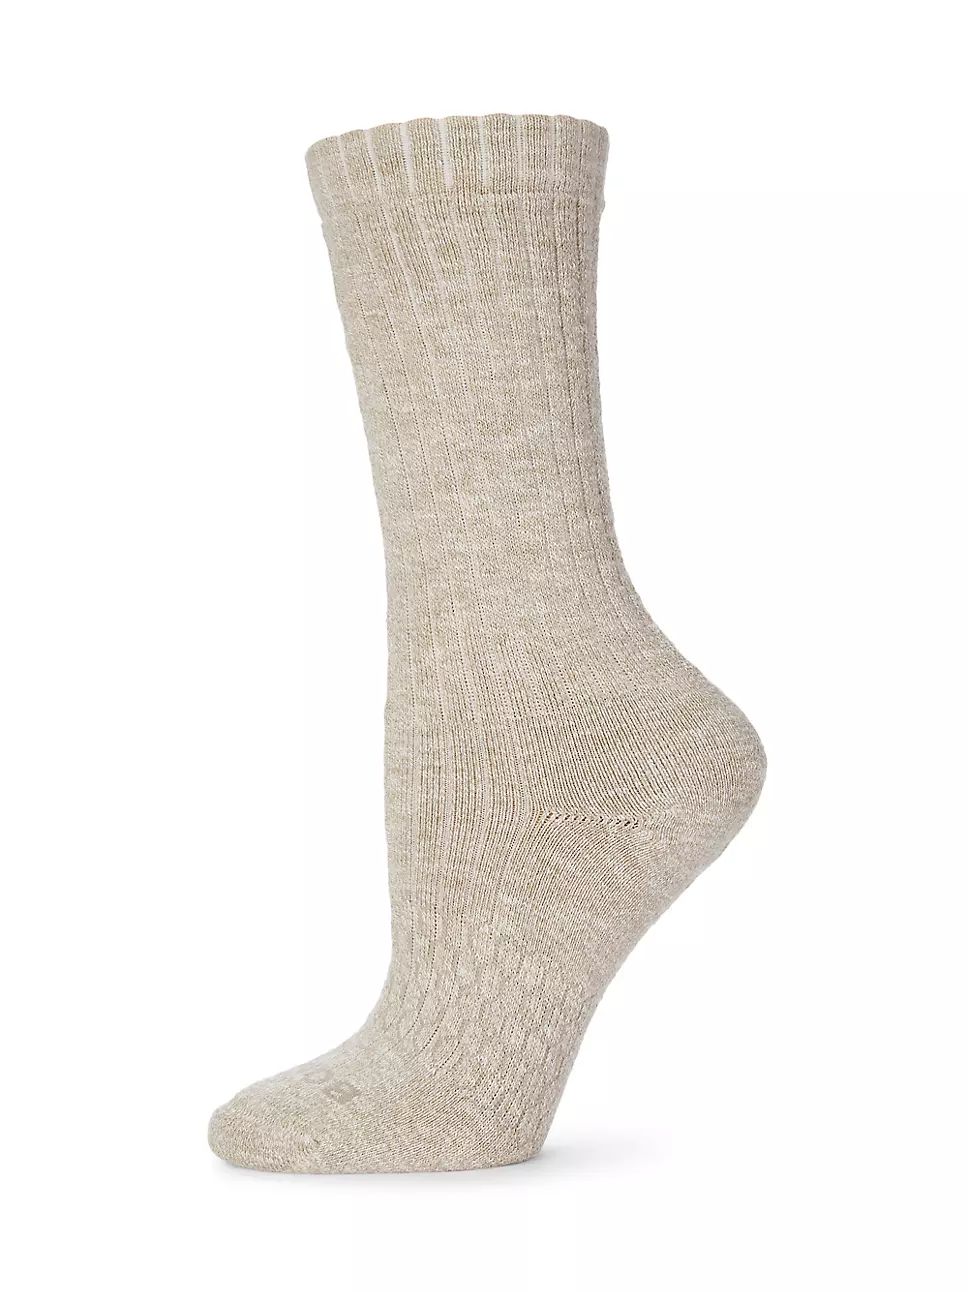 Ragg Calf Socks | Saks Fifth Avenue